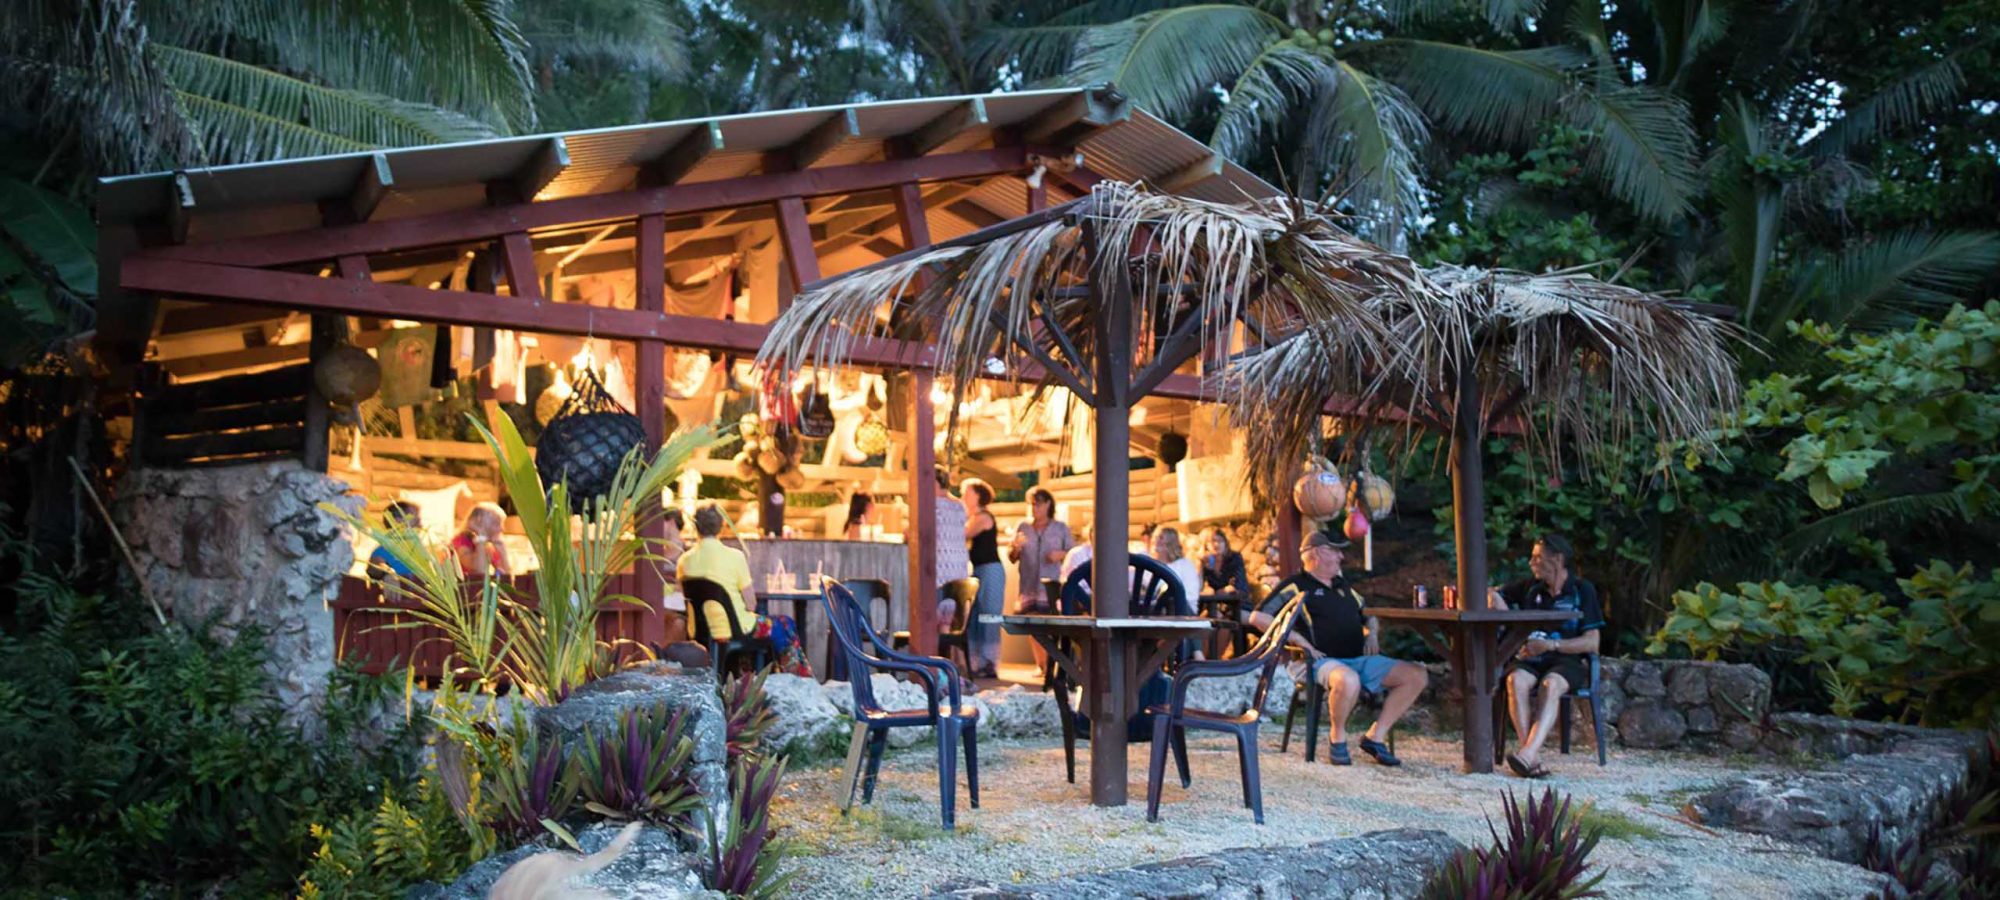 Niue-Island-Washaway-Cafe-Evening-Lights-People-Activities-Banner